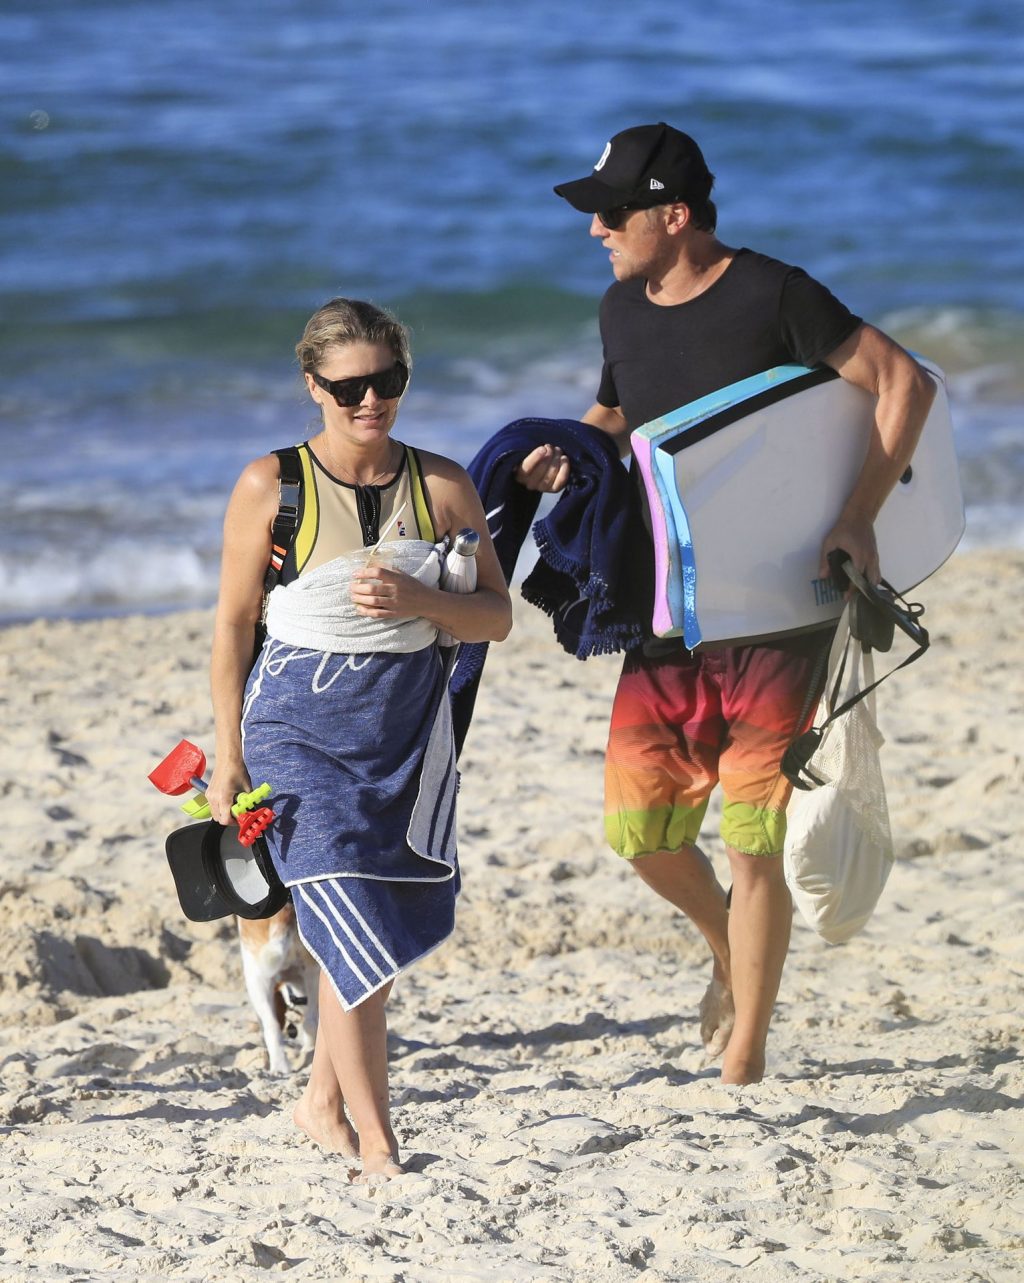 Natalie Bassingthwaighte Enjoys a Trip to the Beach in Australia (36 Photos)